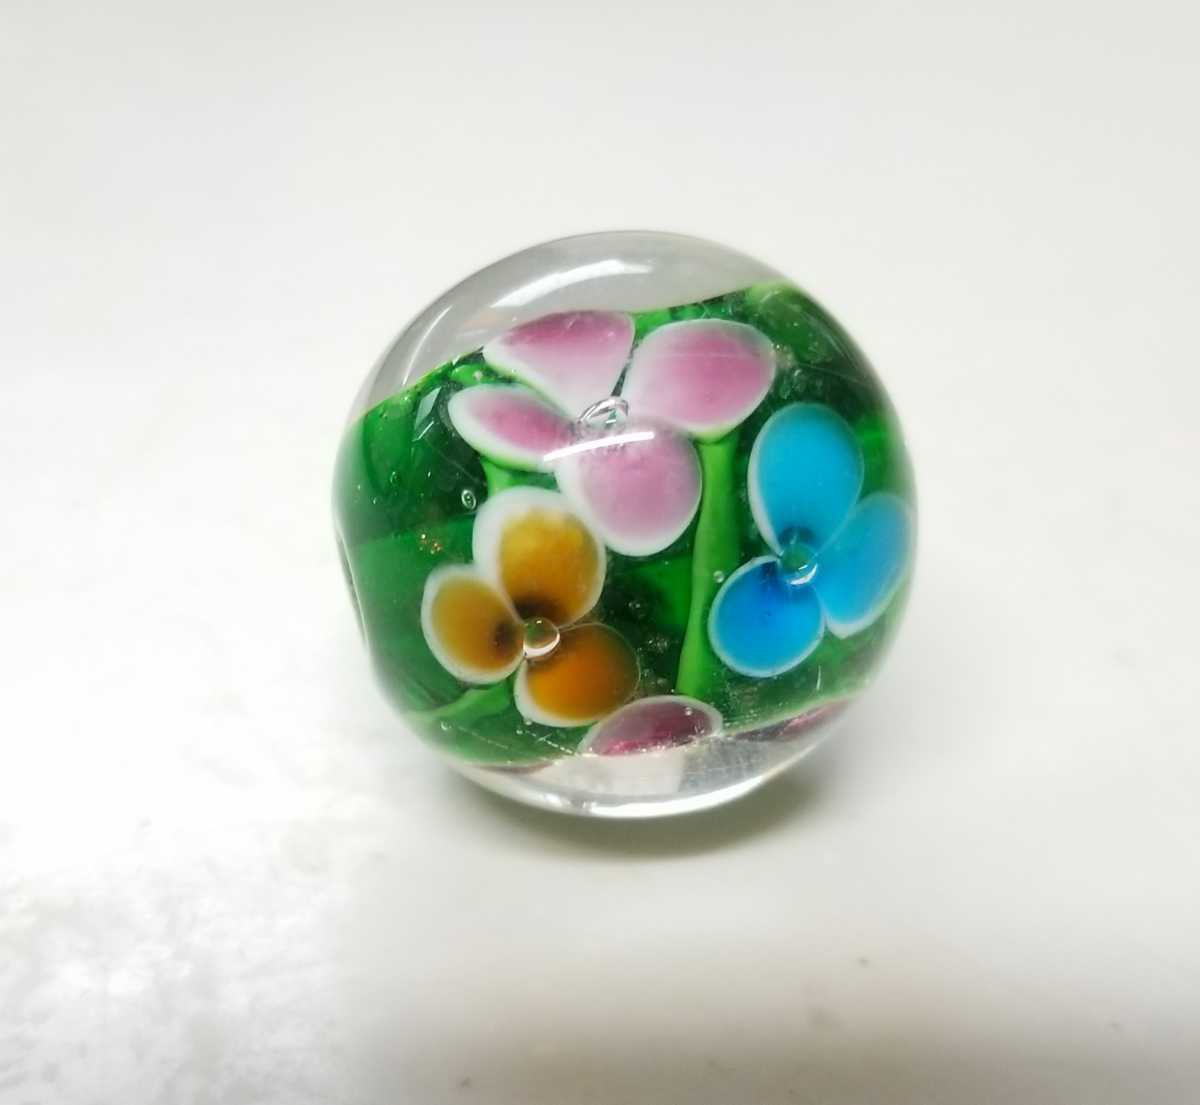  glass beads tonbodama green 24 millimeter 